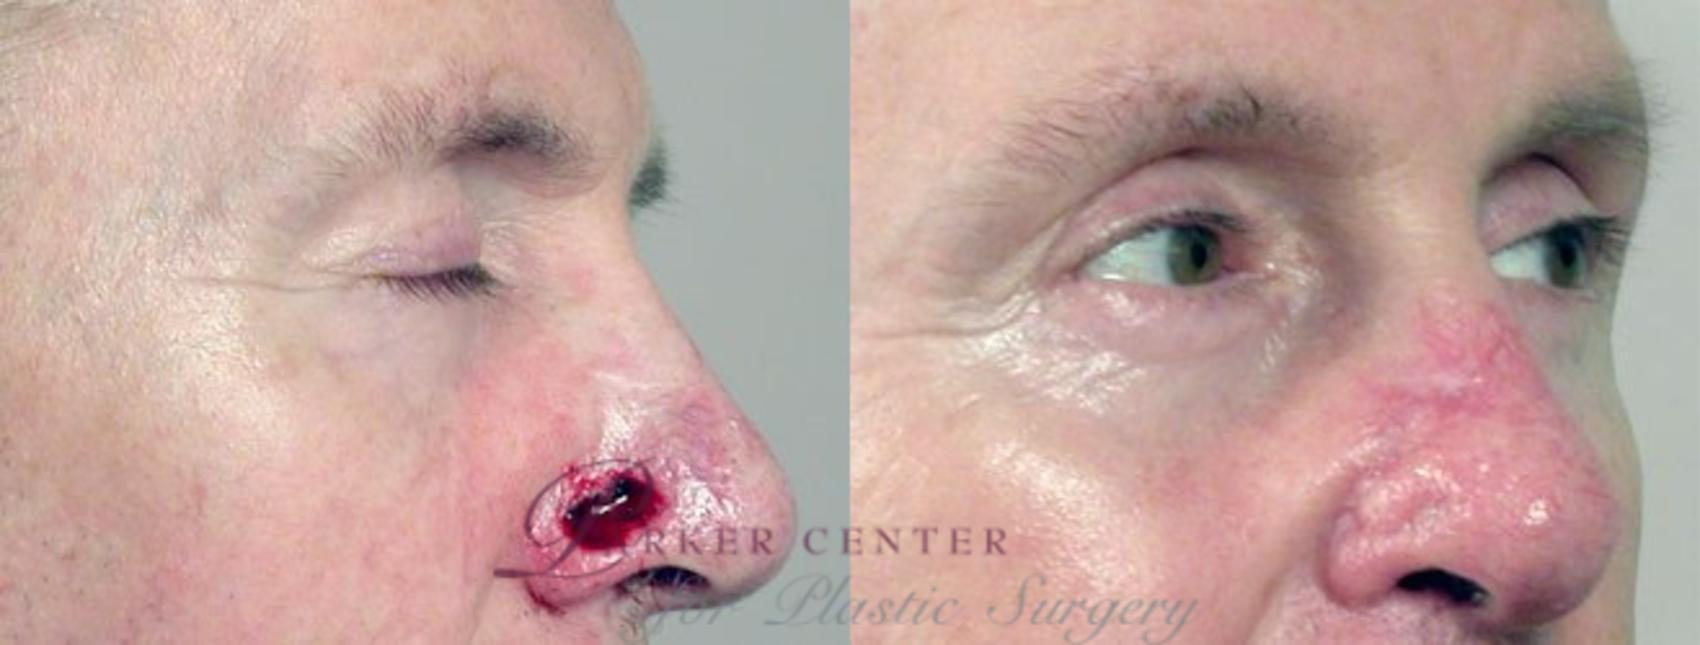 Skin Cancer Treatment Case 1066 Before & After View #1 | Paramus, NJ | Parker Center for Plastic Surgery